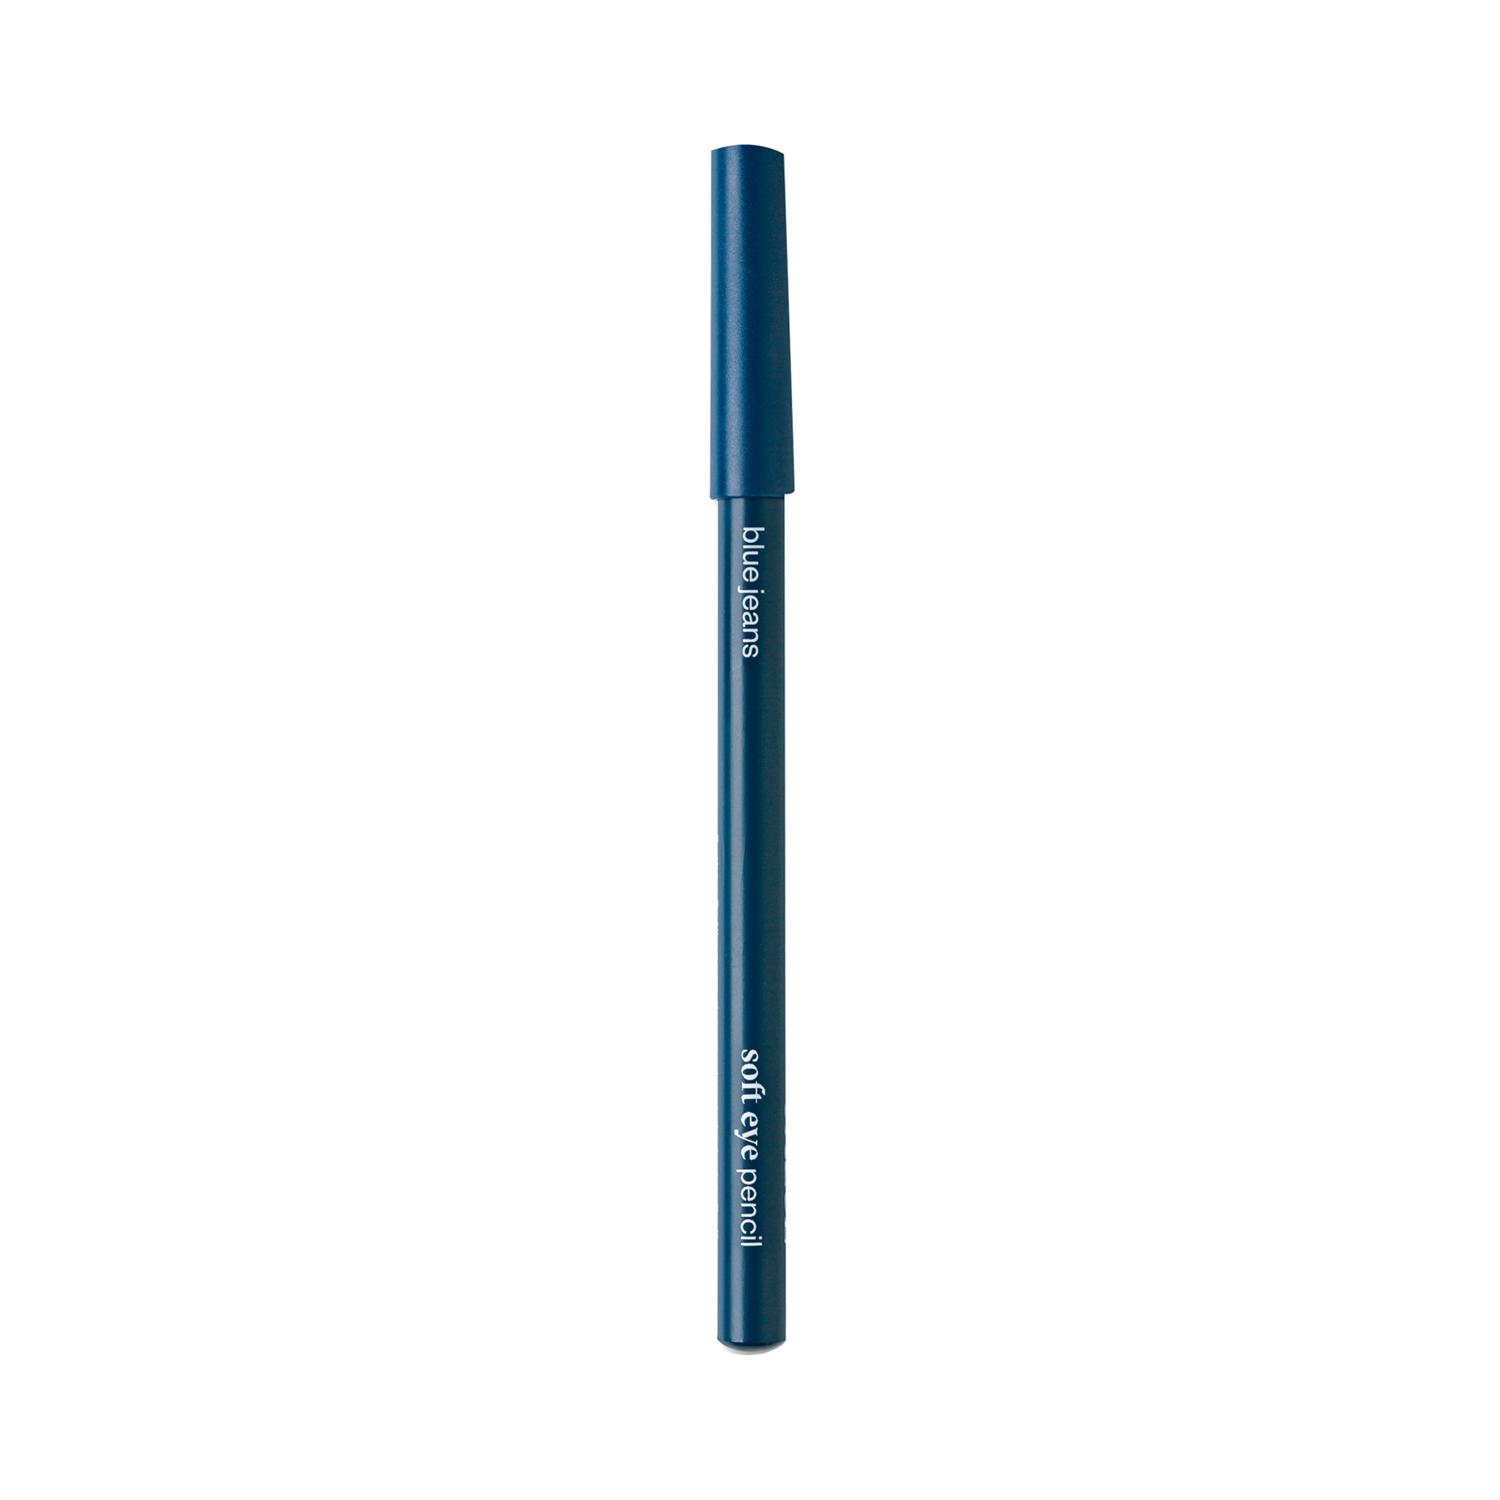 paese cosmetics soft eye pencil - 04 blue jeans (1.5g)